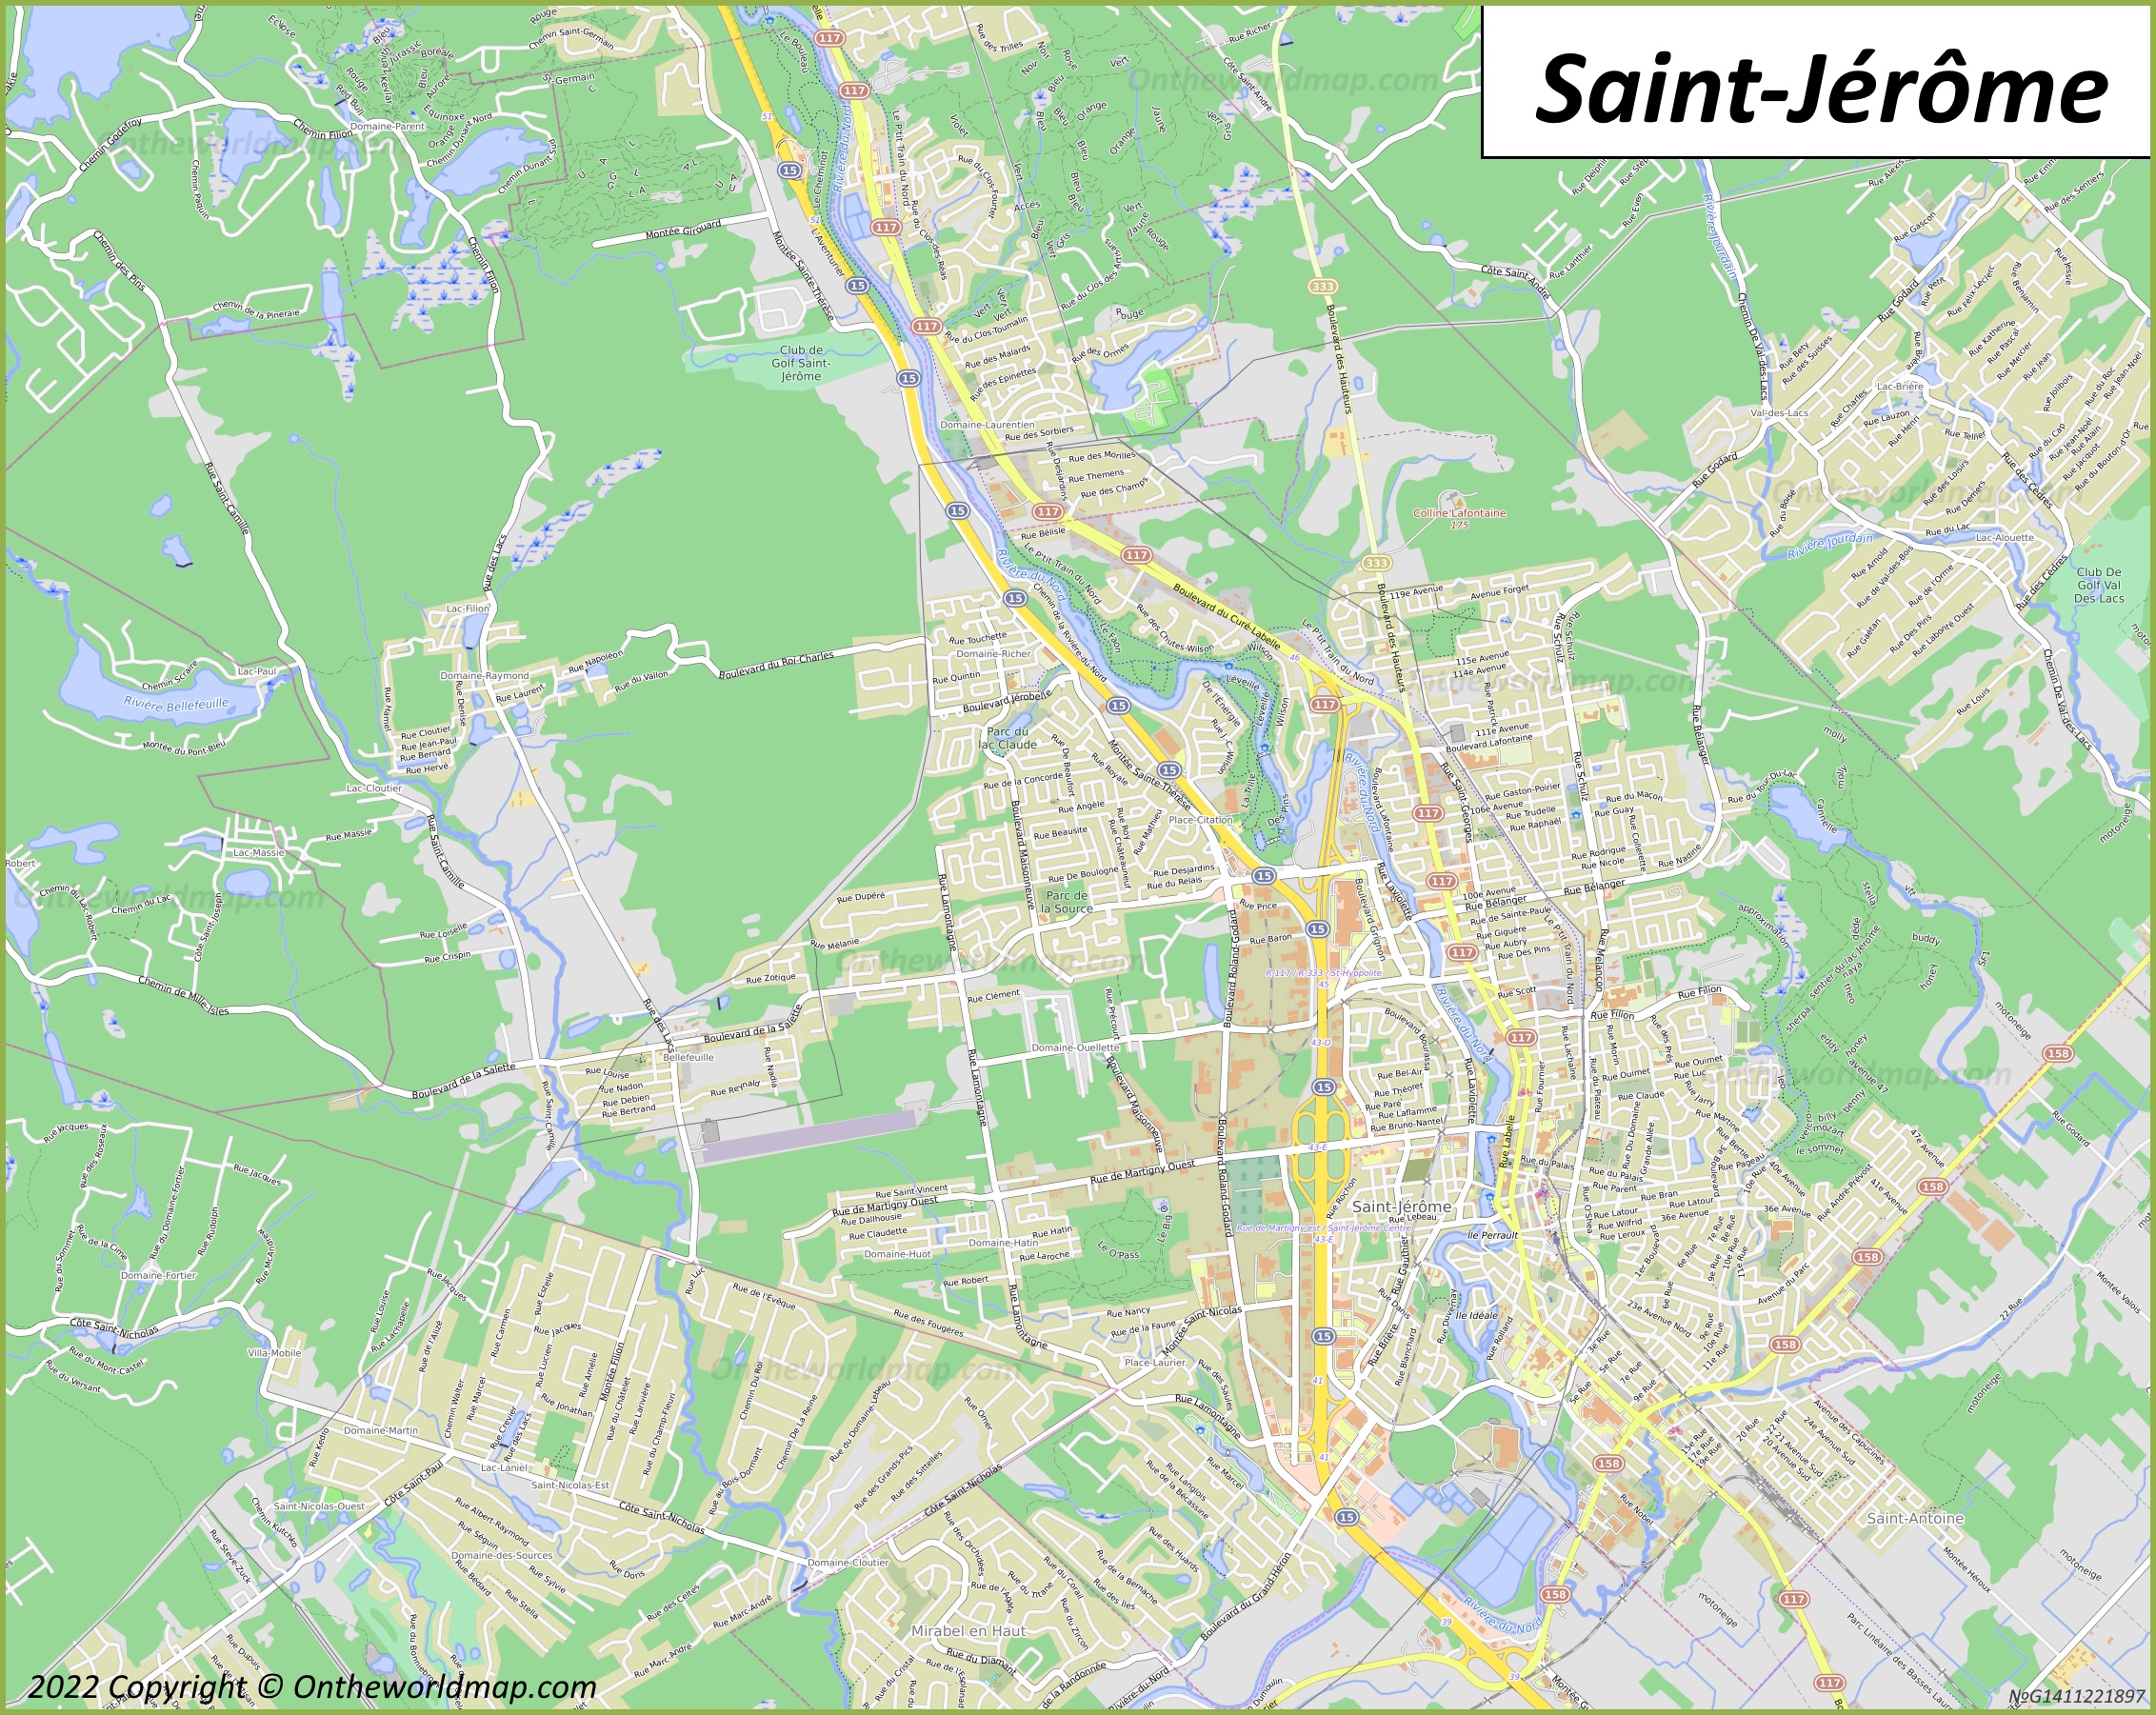 Map of Saint-Jérôme